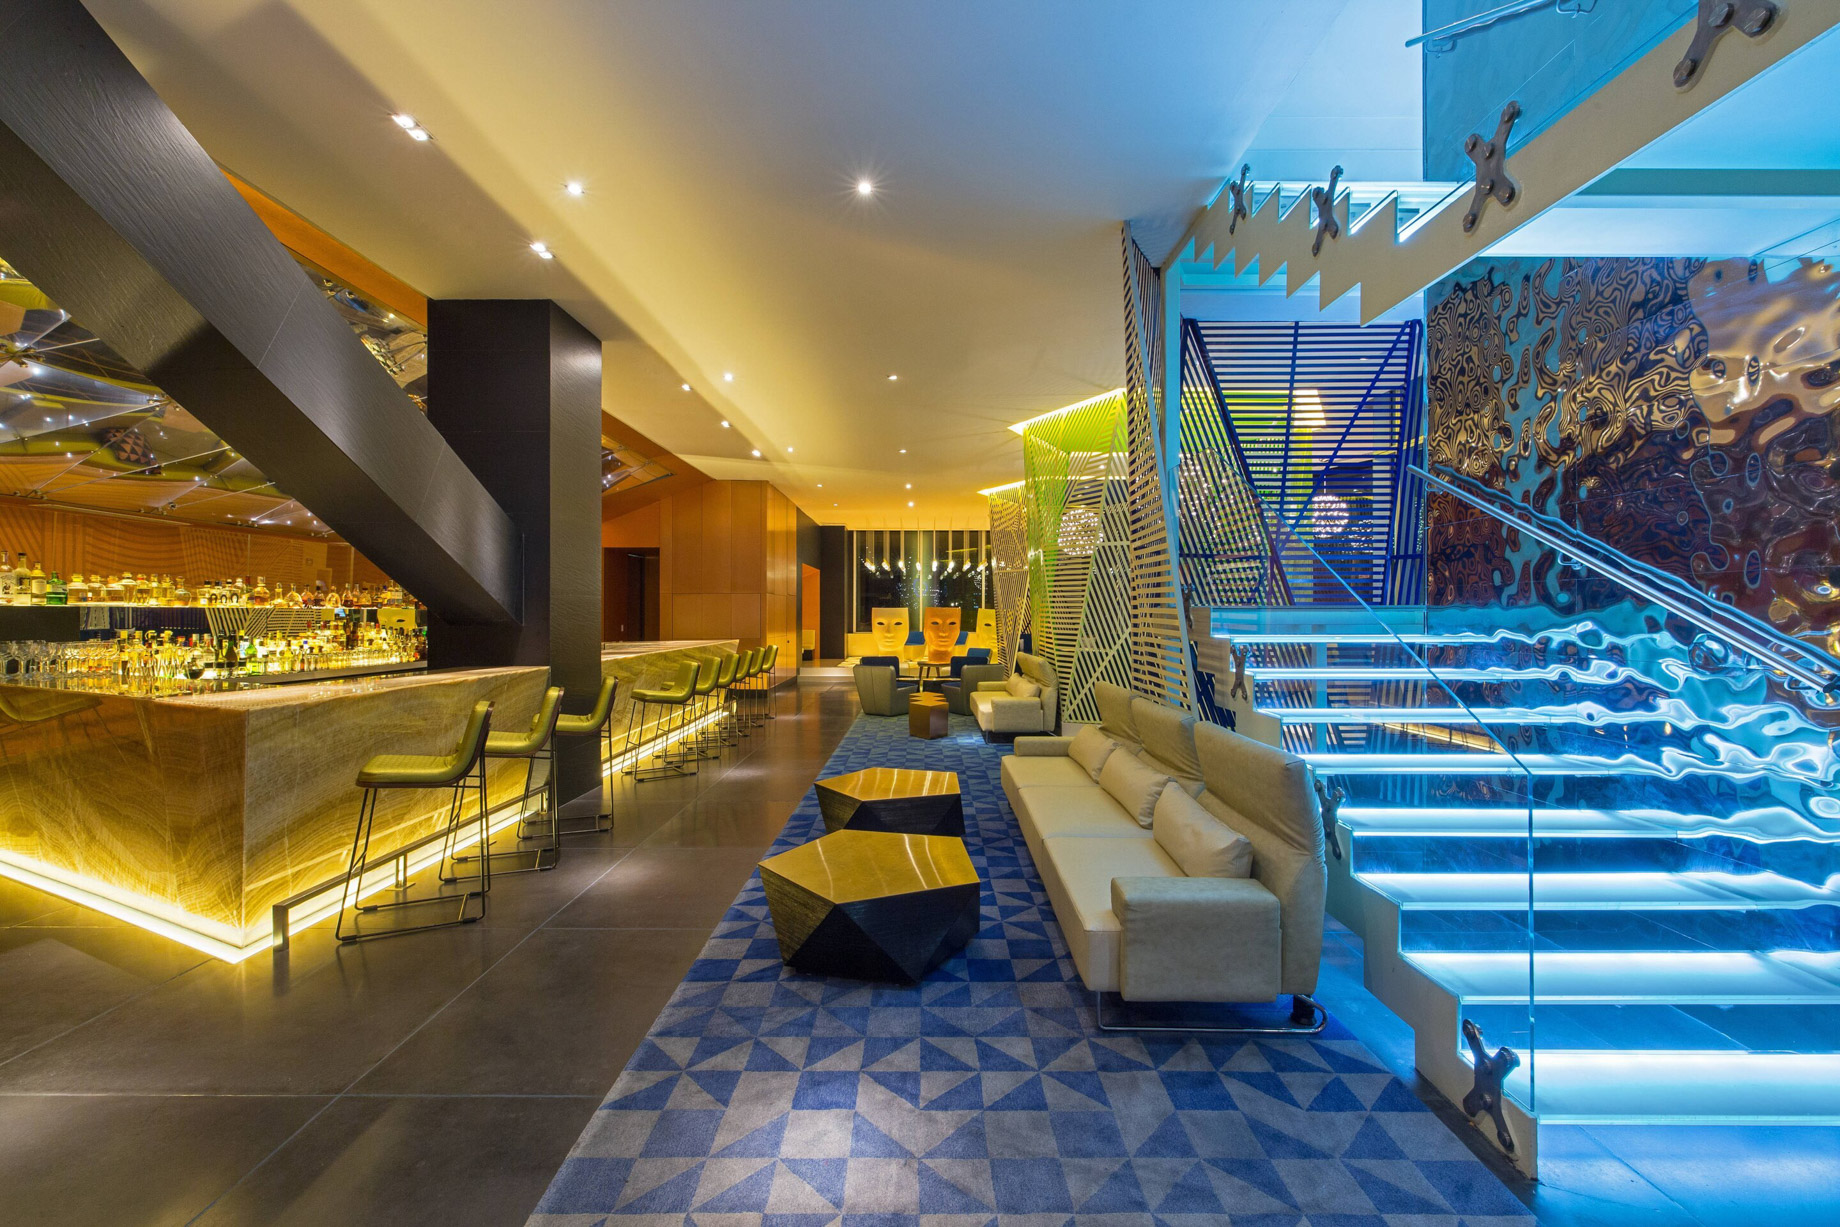 W Mexico City Hotel – Polanco, Mexico City, Mexico – Lobby Living Room Bar